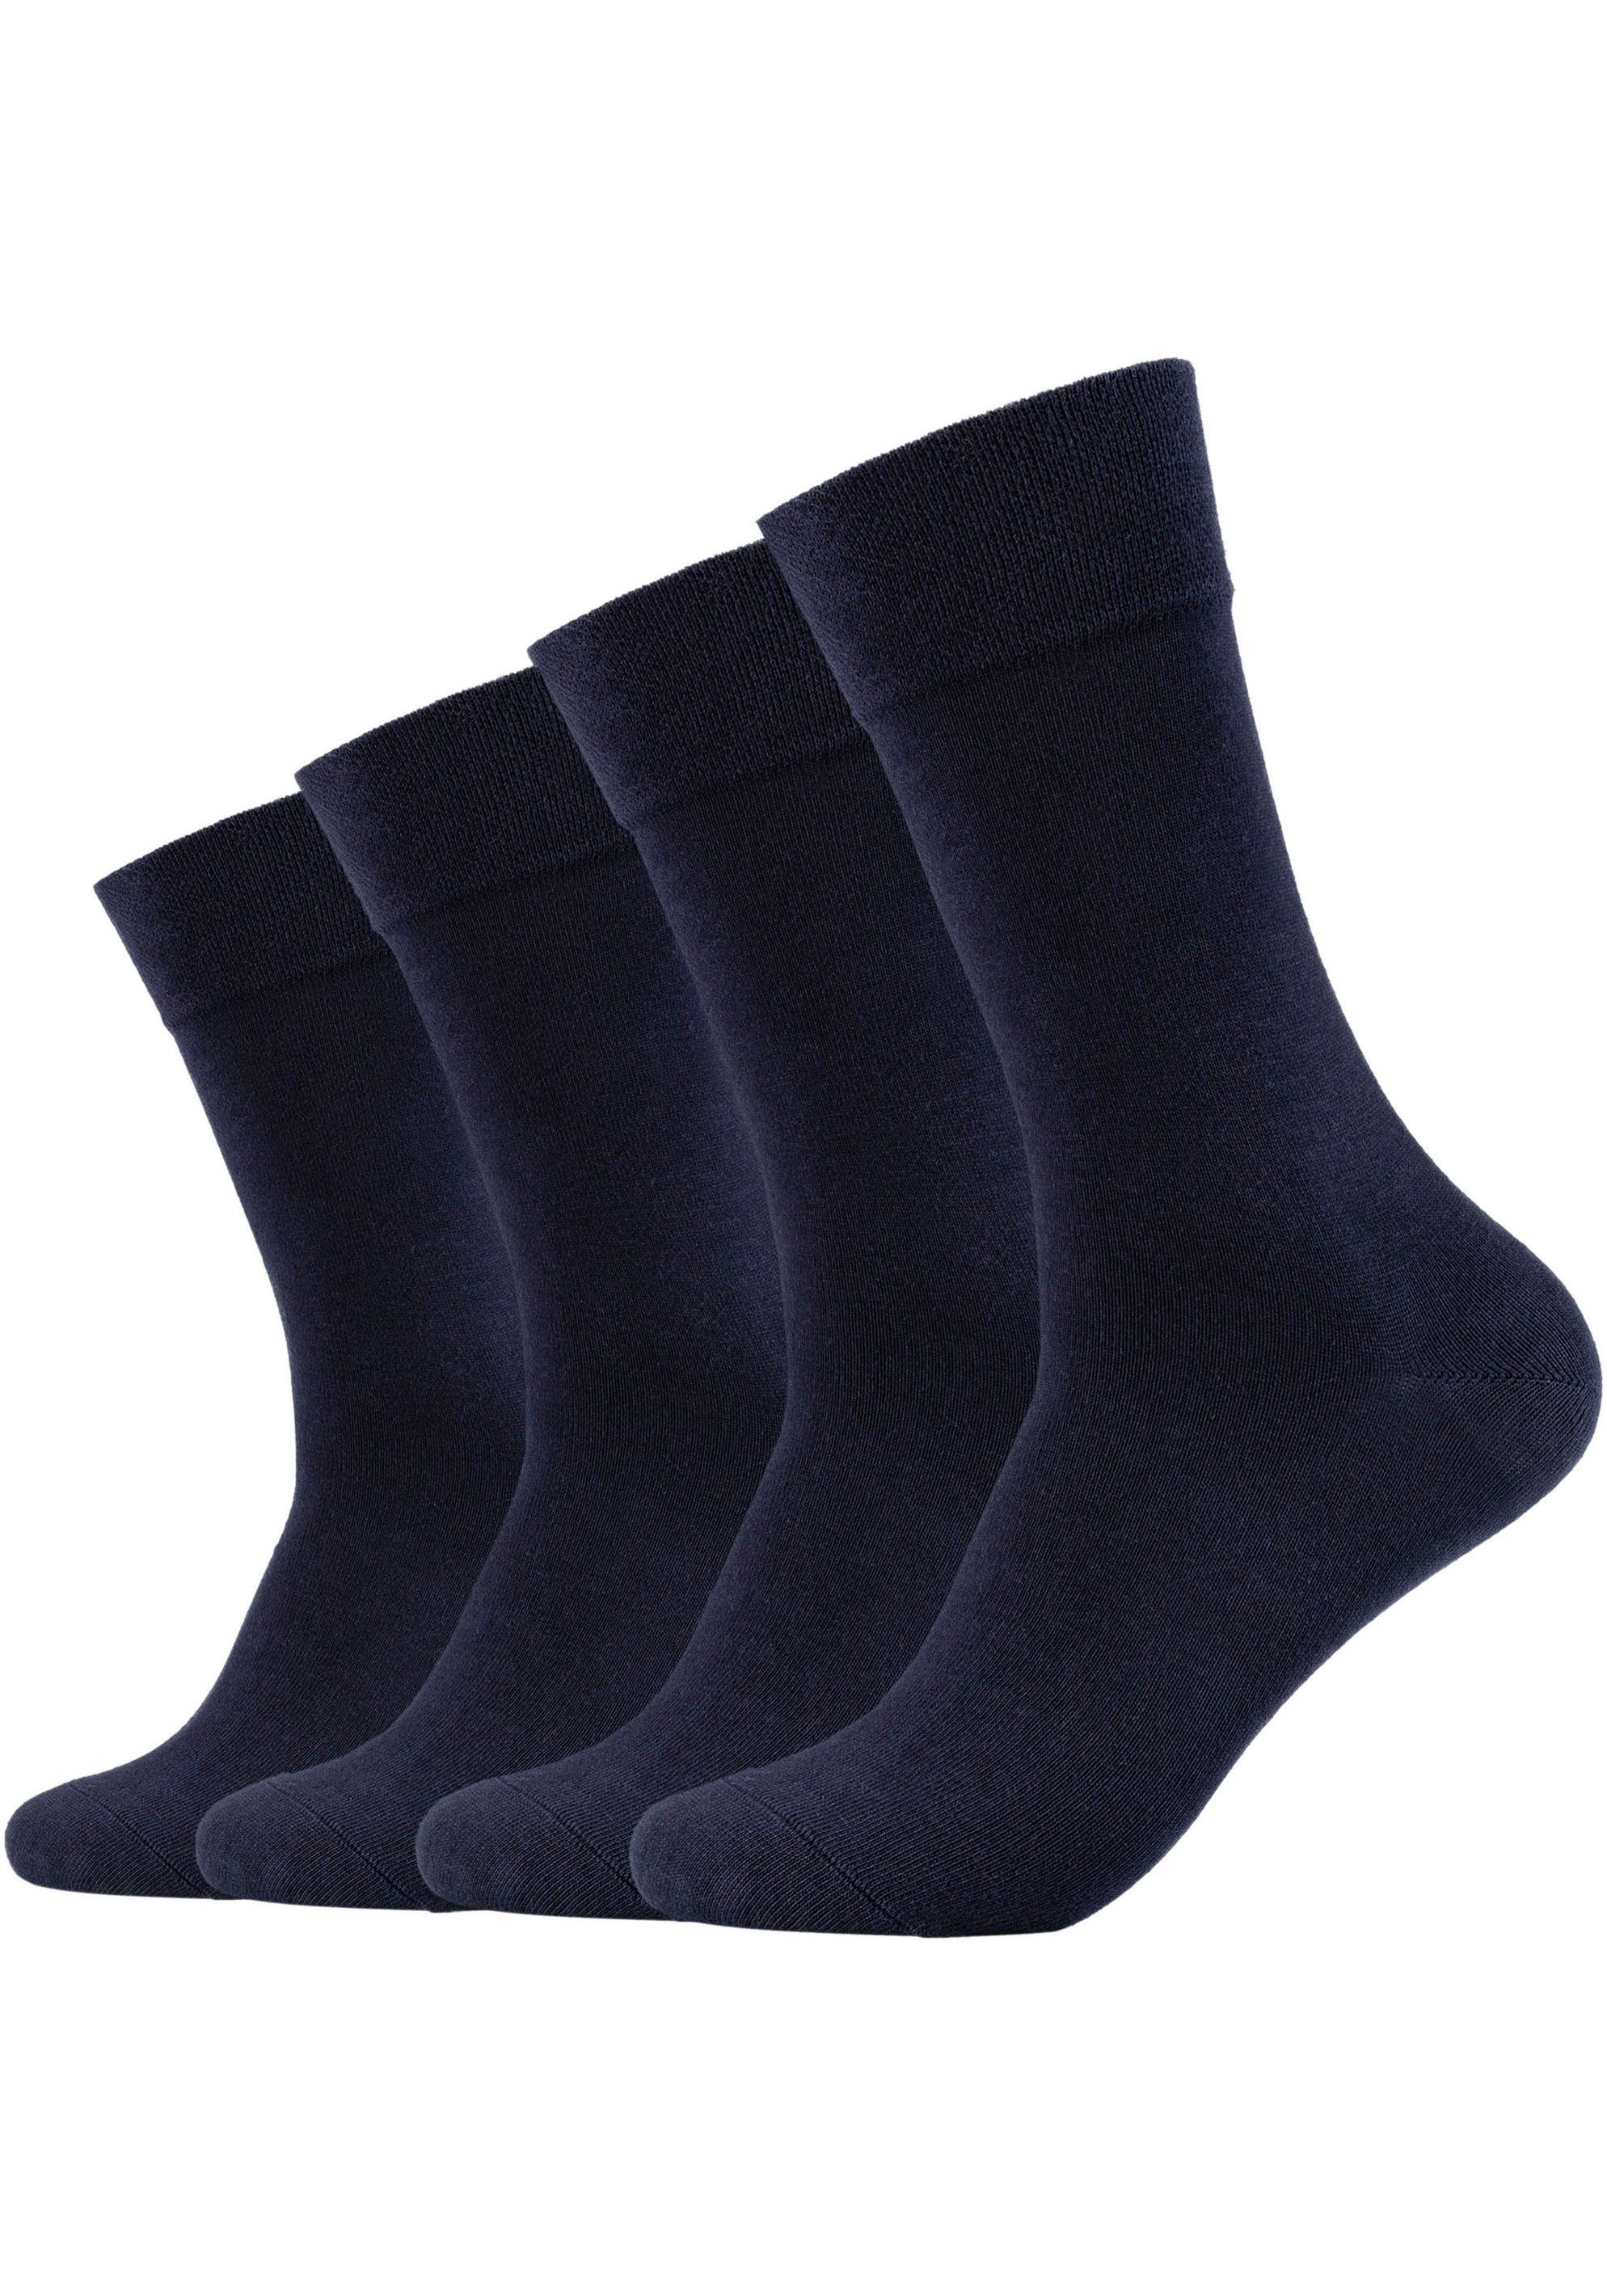 Camano Socken (Packung, 4-Paar) 97% Bio-Baumwolle navy Atmungsaktiv